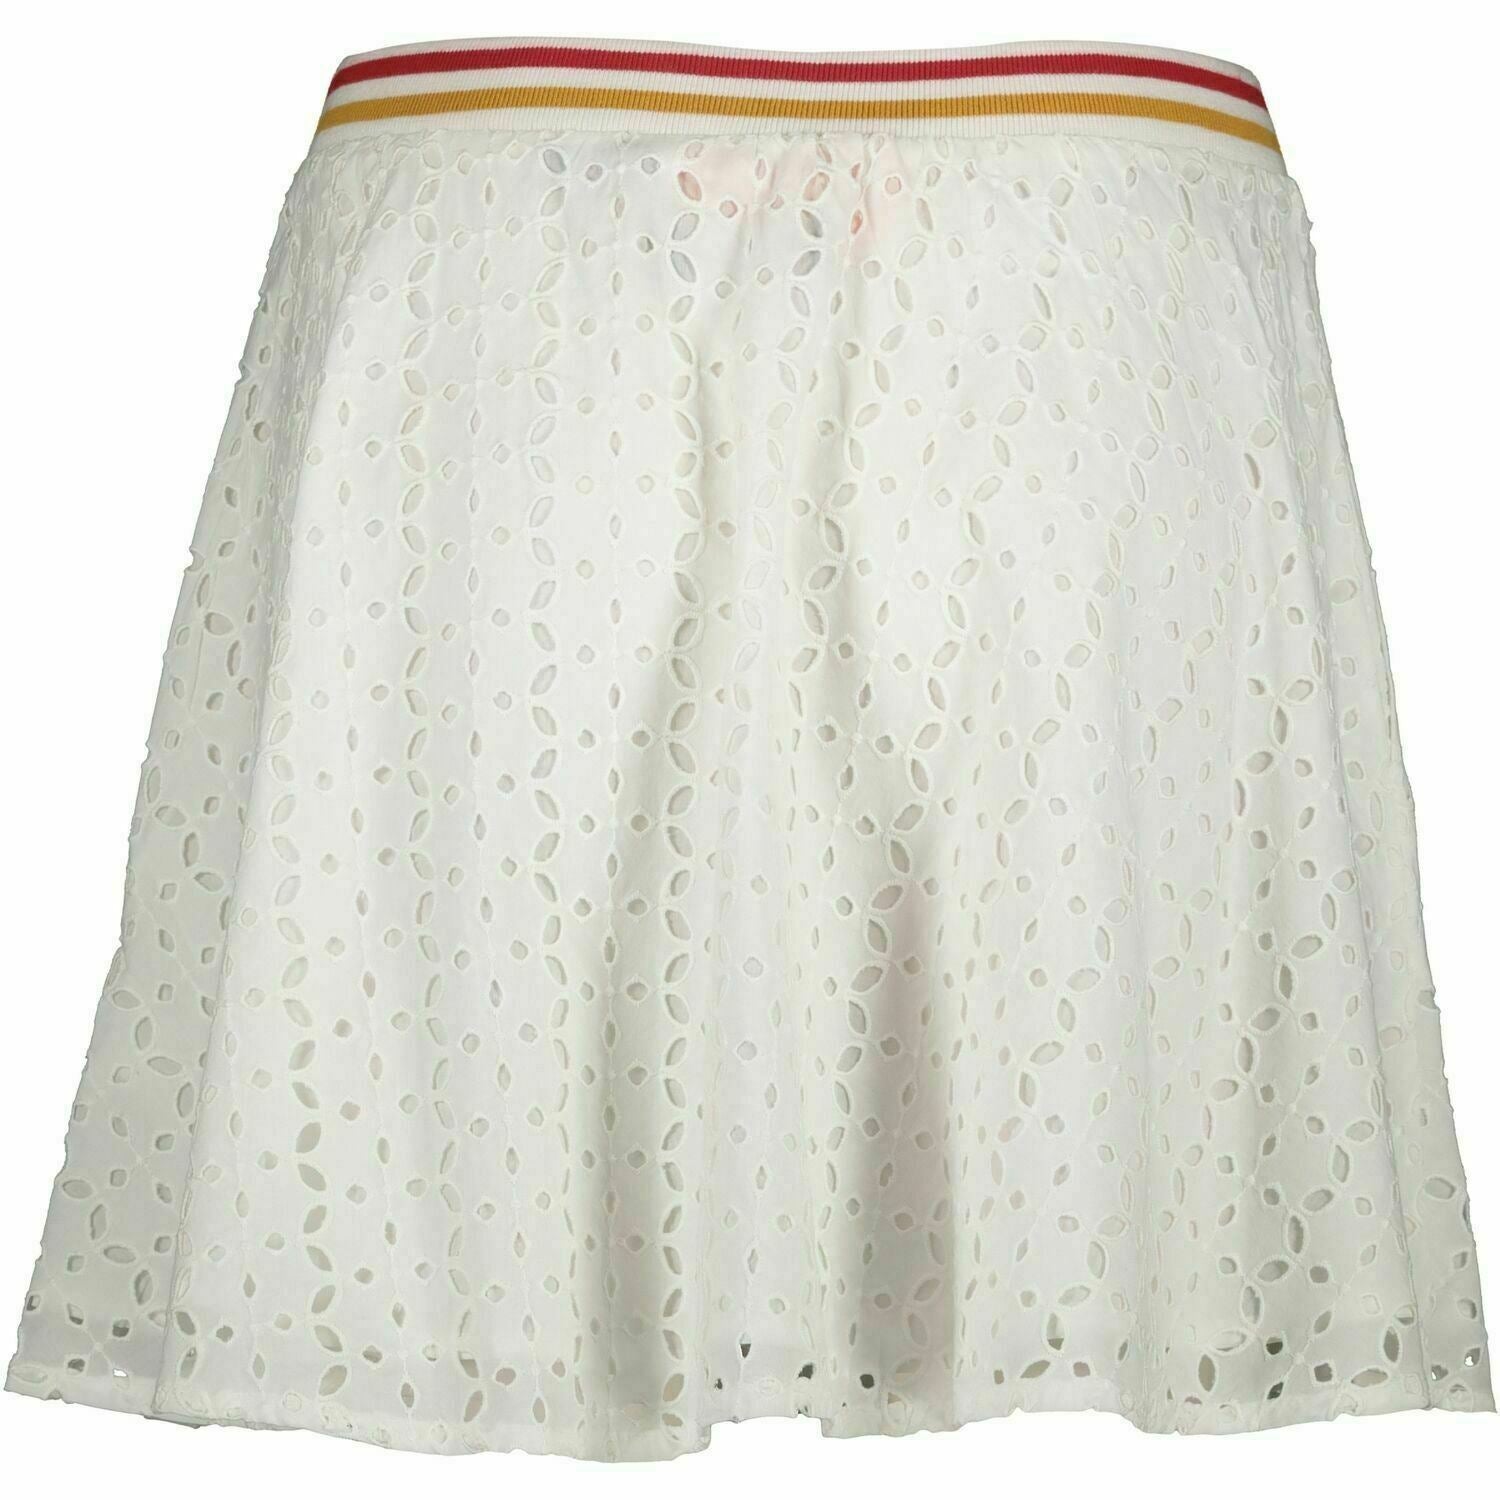 SUPERDRY Women's TEAGAN SCHIFFLI Skirt, White, size M / UK 12